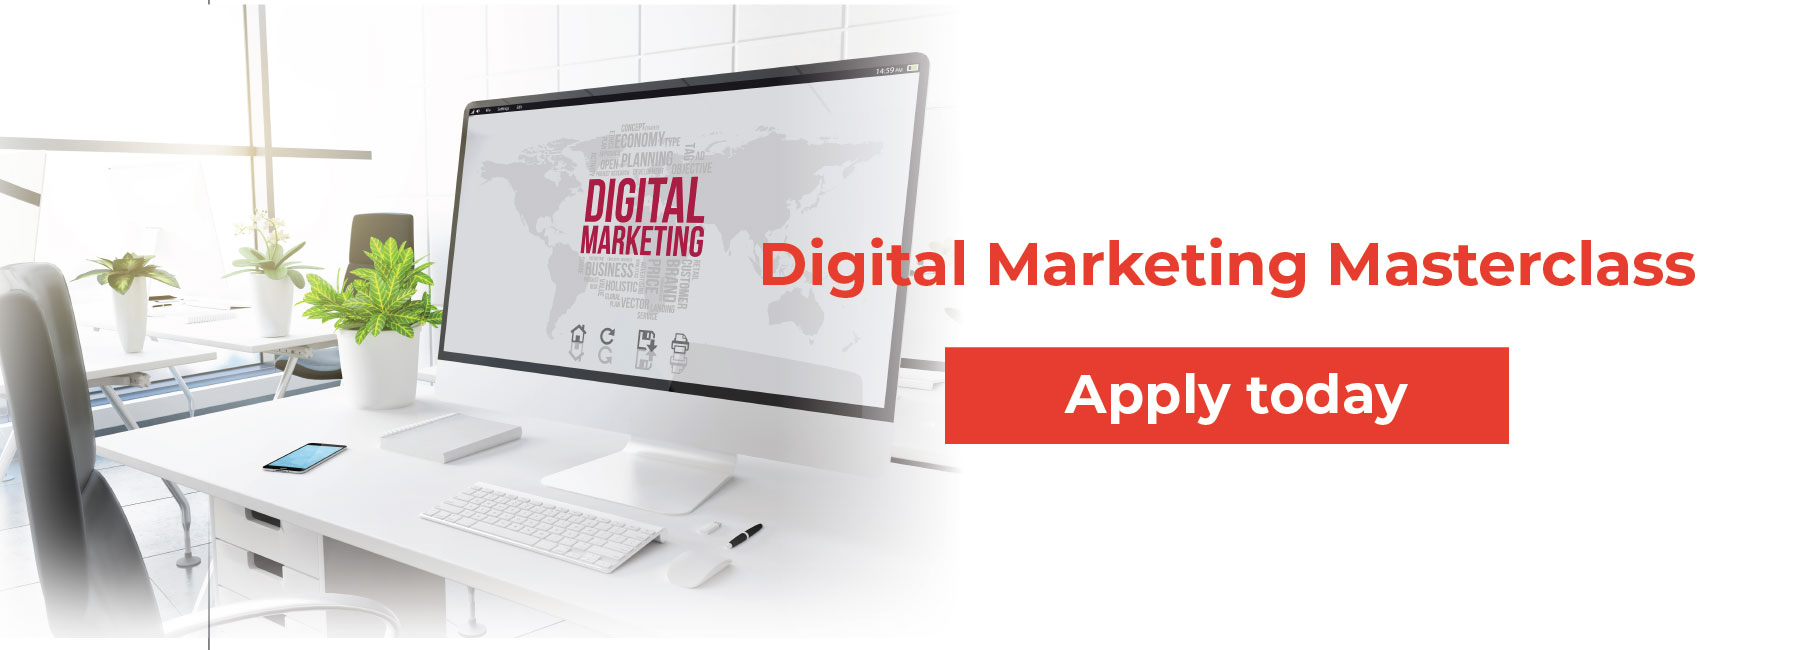 Digital-Marketing-Masterclass-Banner-1